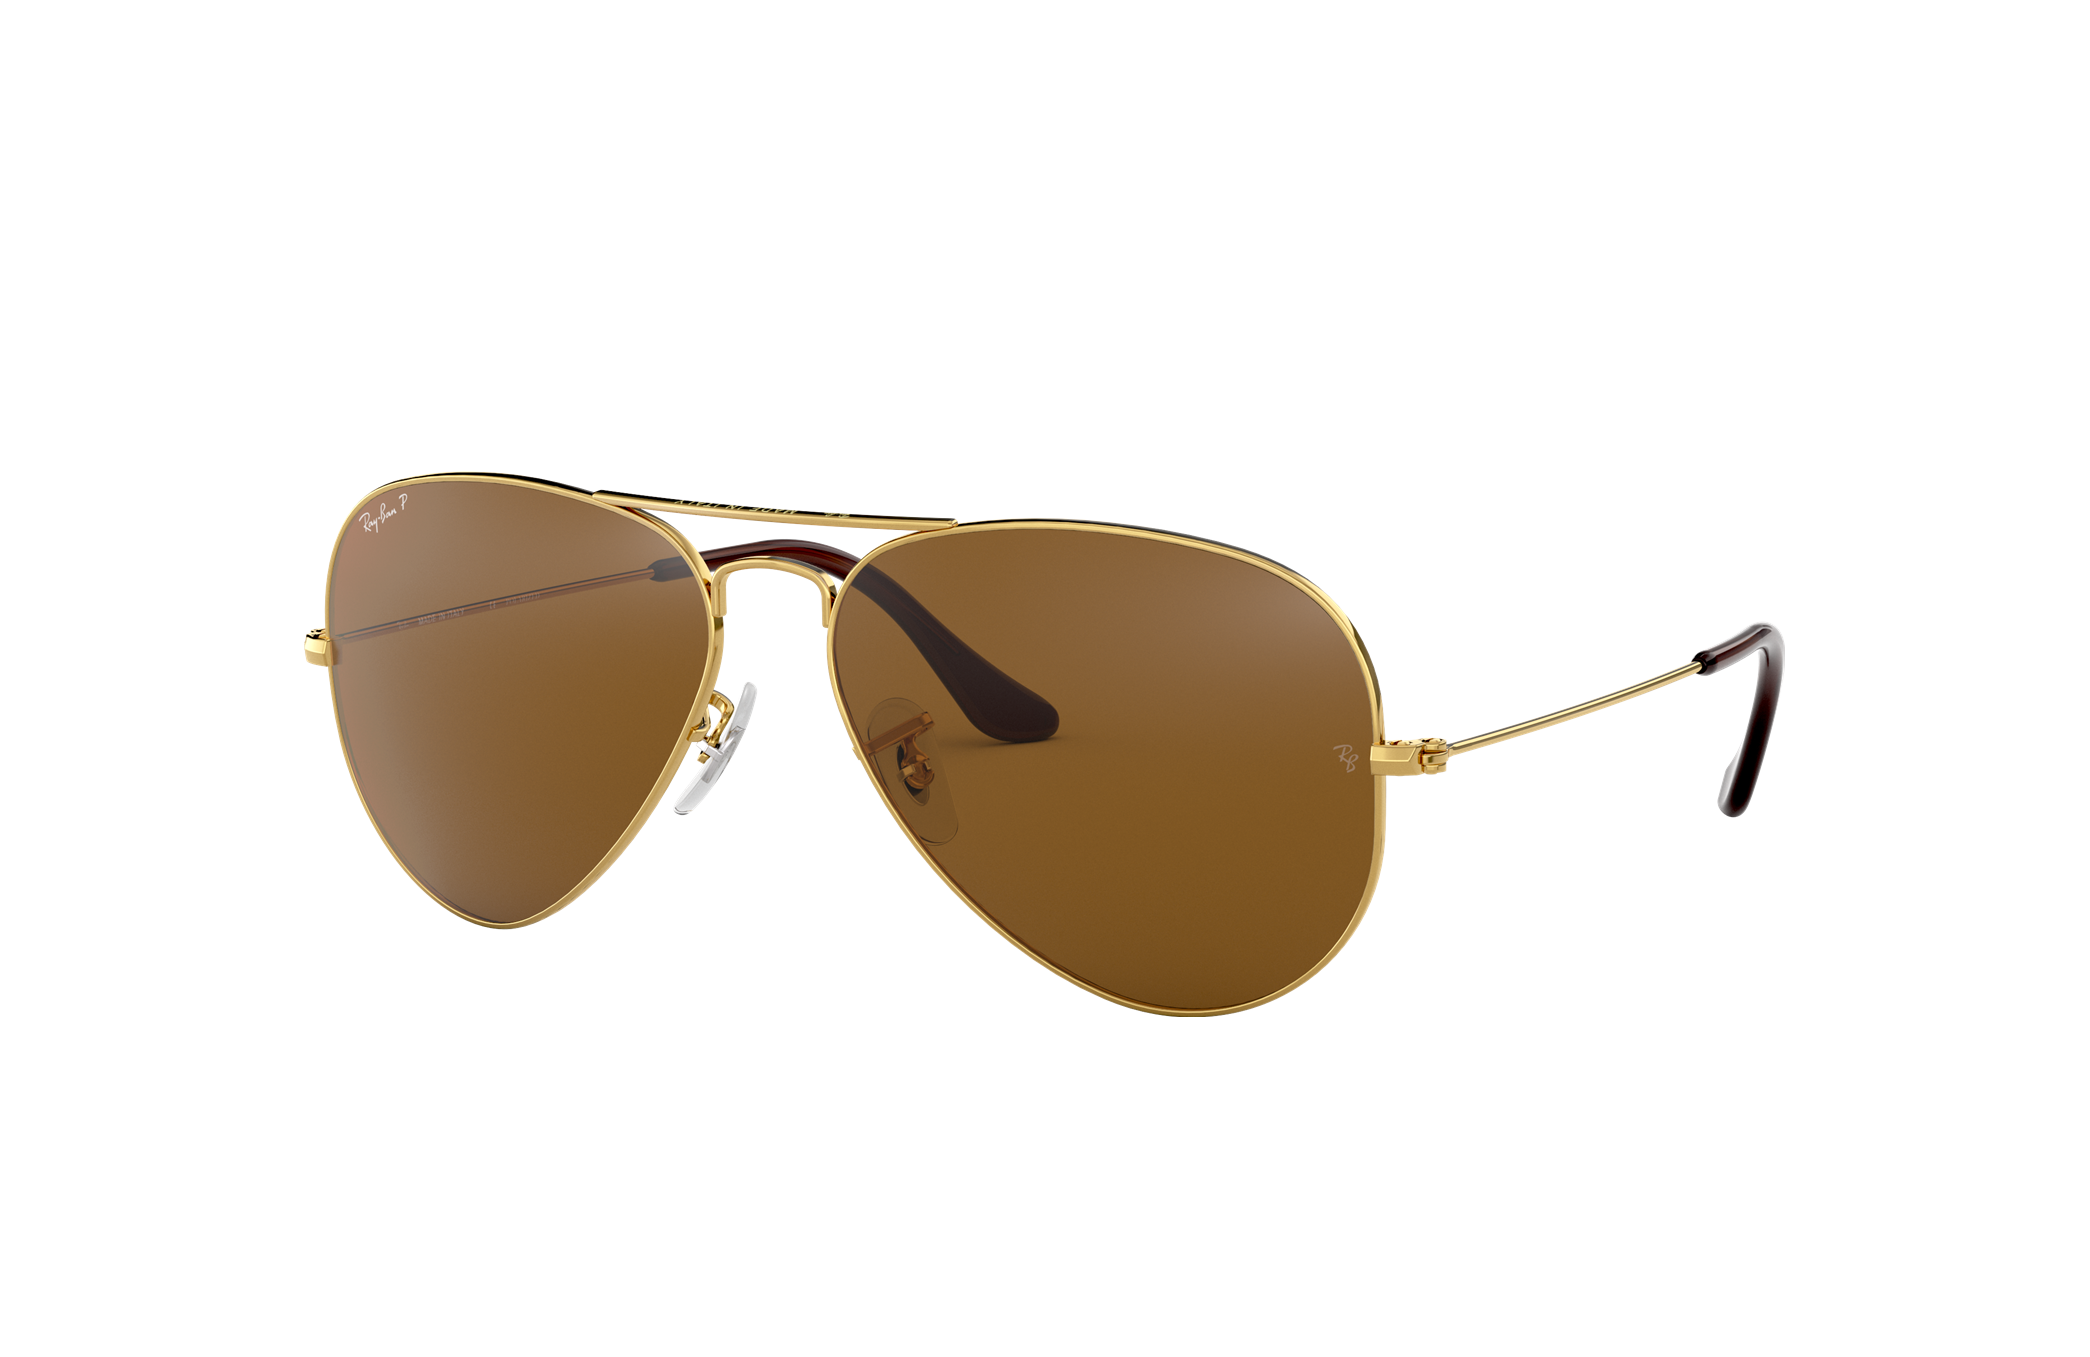 Classic Men’s Polarized Aviator/Pilot sunglasses Mirrored Lens NEW Arrival 